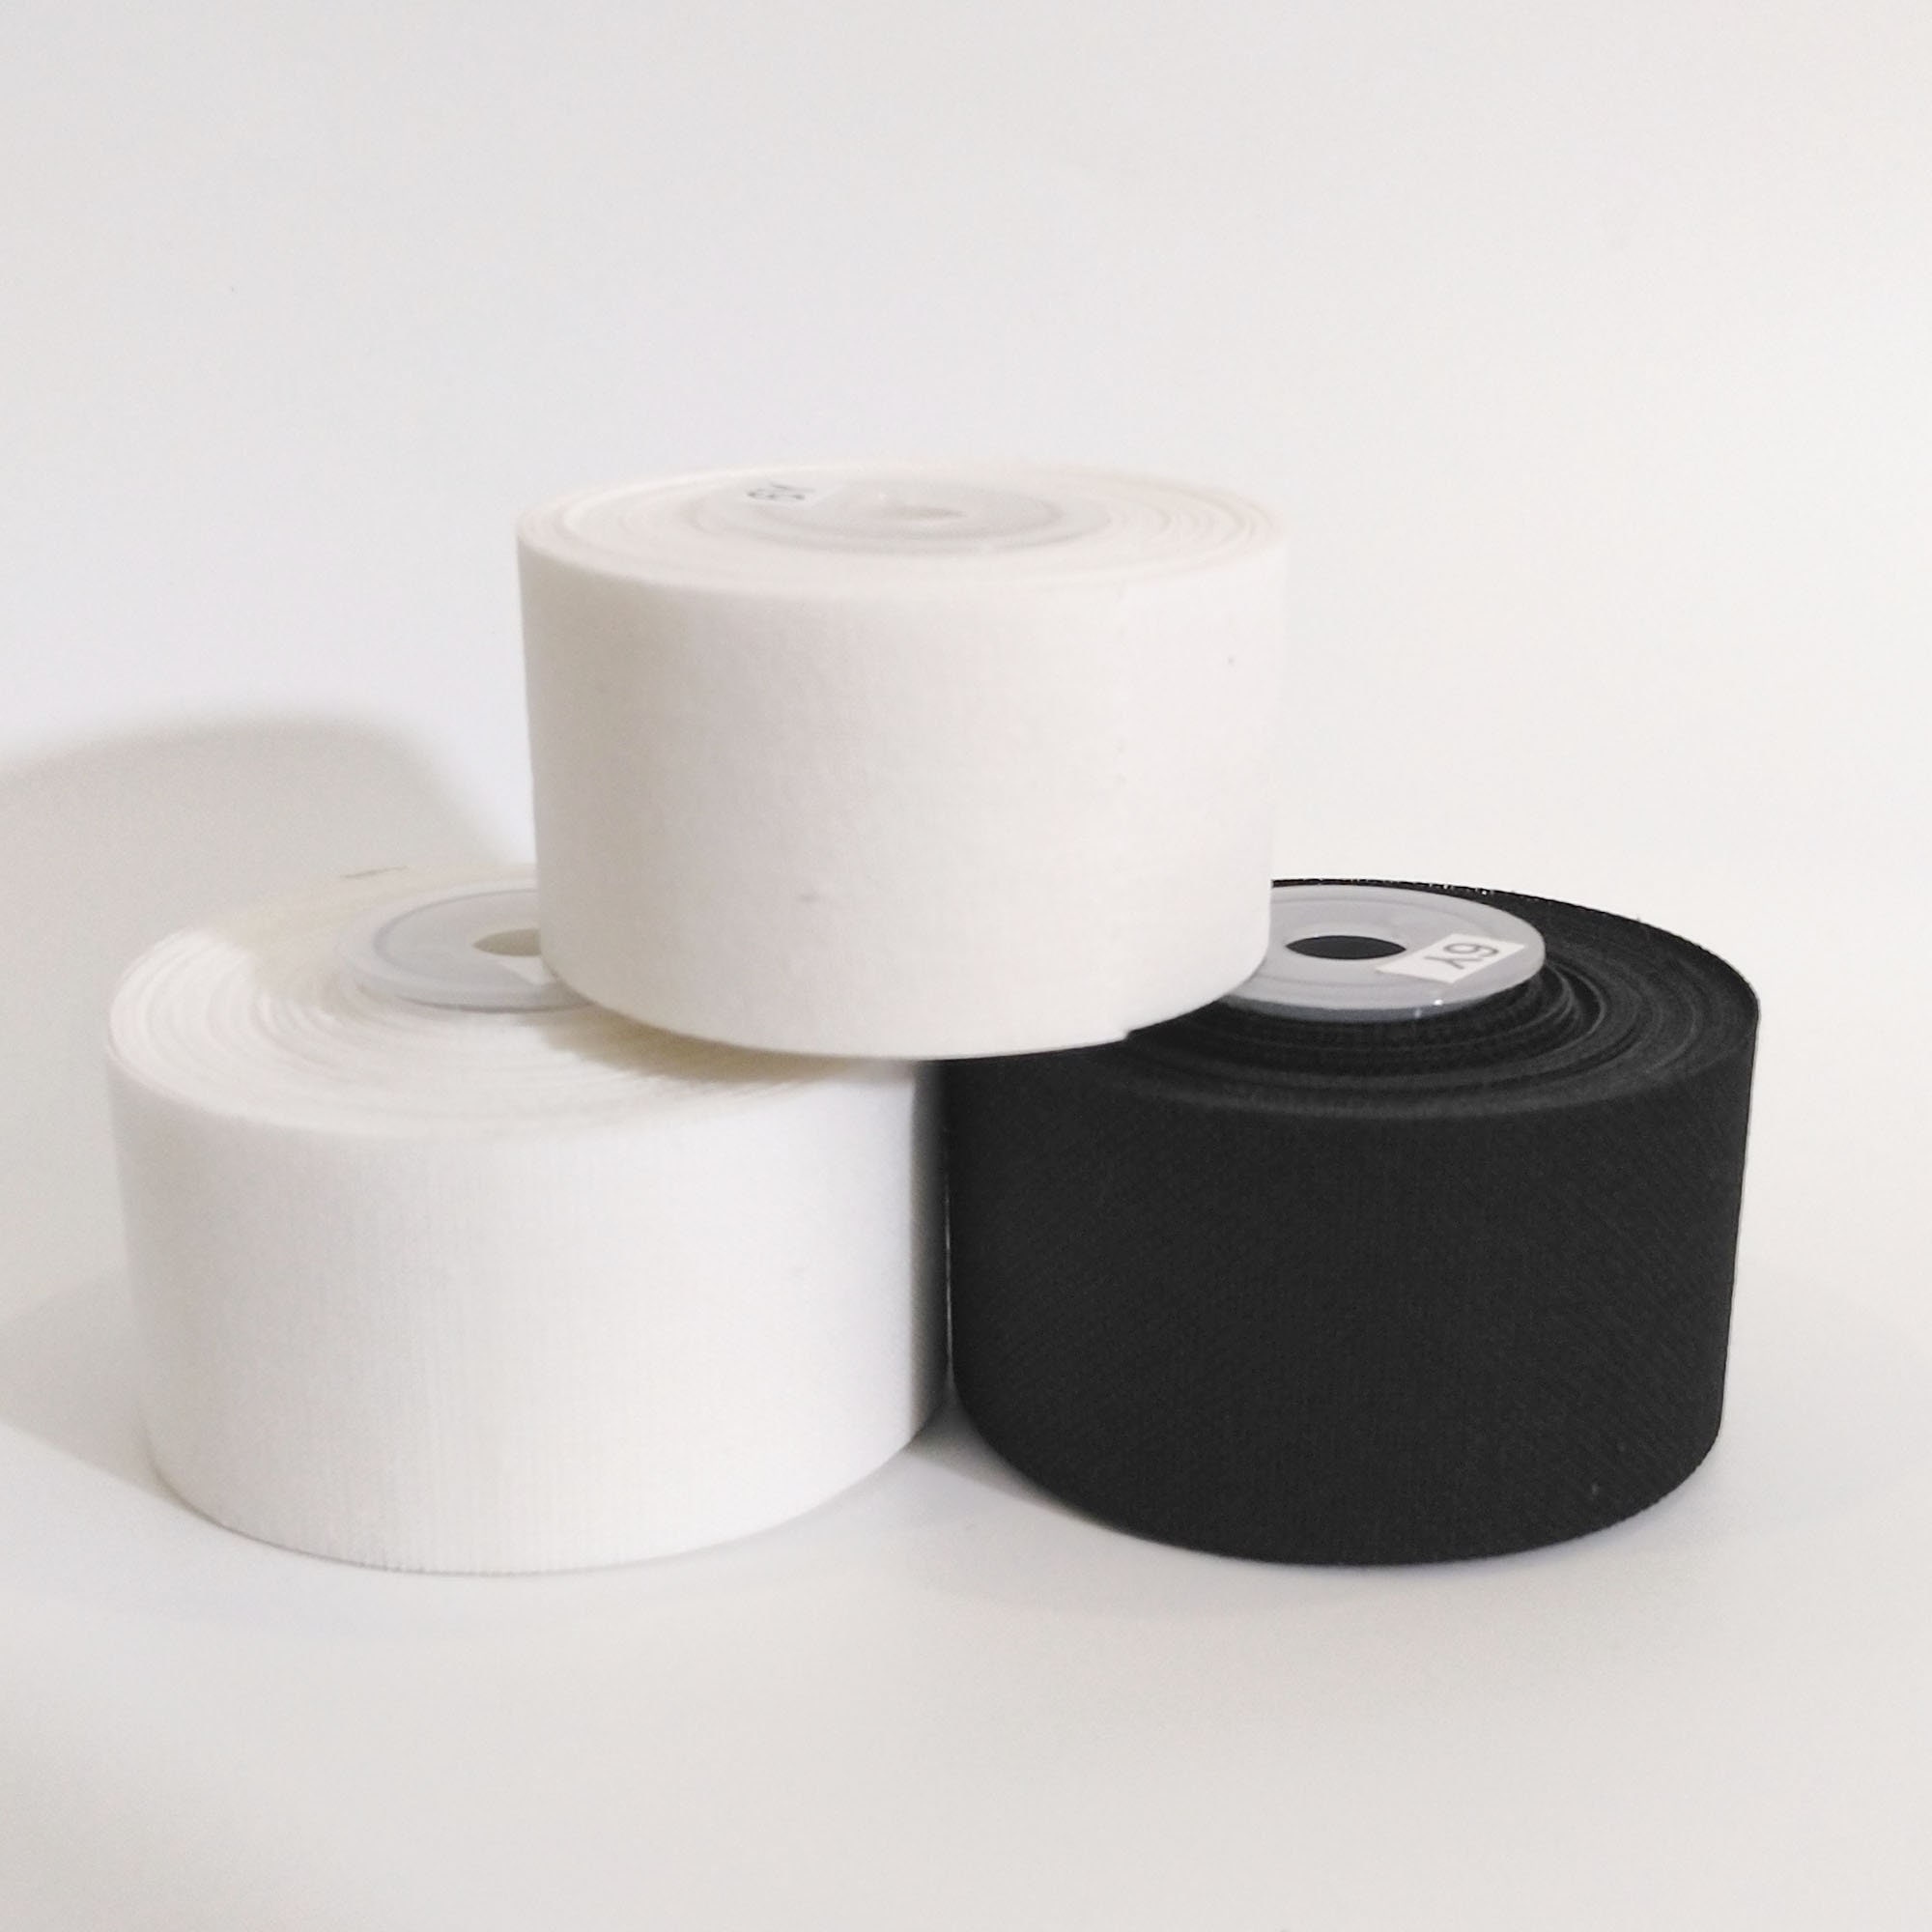 100 Cm Iron on Hem Clothing Tape Adhesive Hem Tape Pants Fabric Tape No Sew Iron  on Hemming Tape Fabric Fusing Tape Roll 2 Colors 